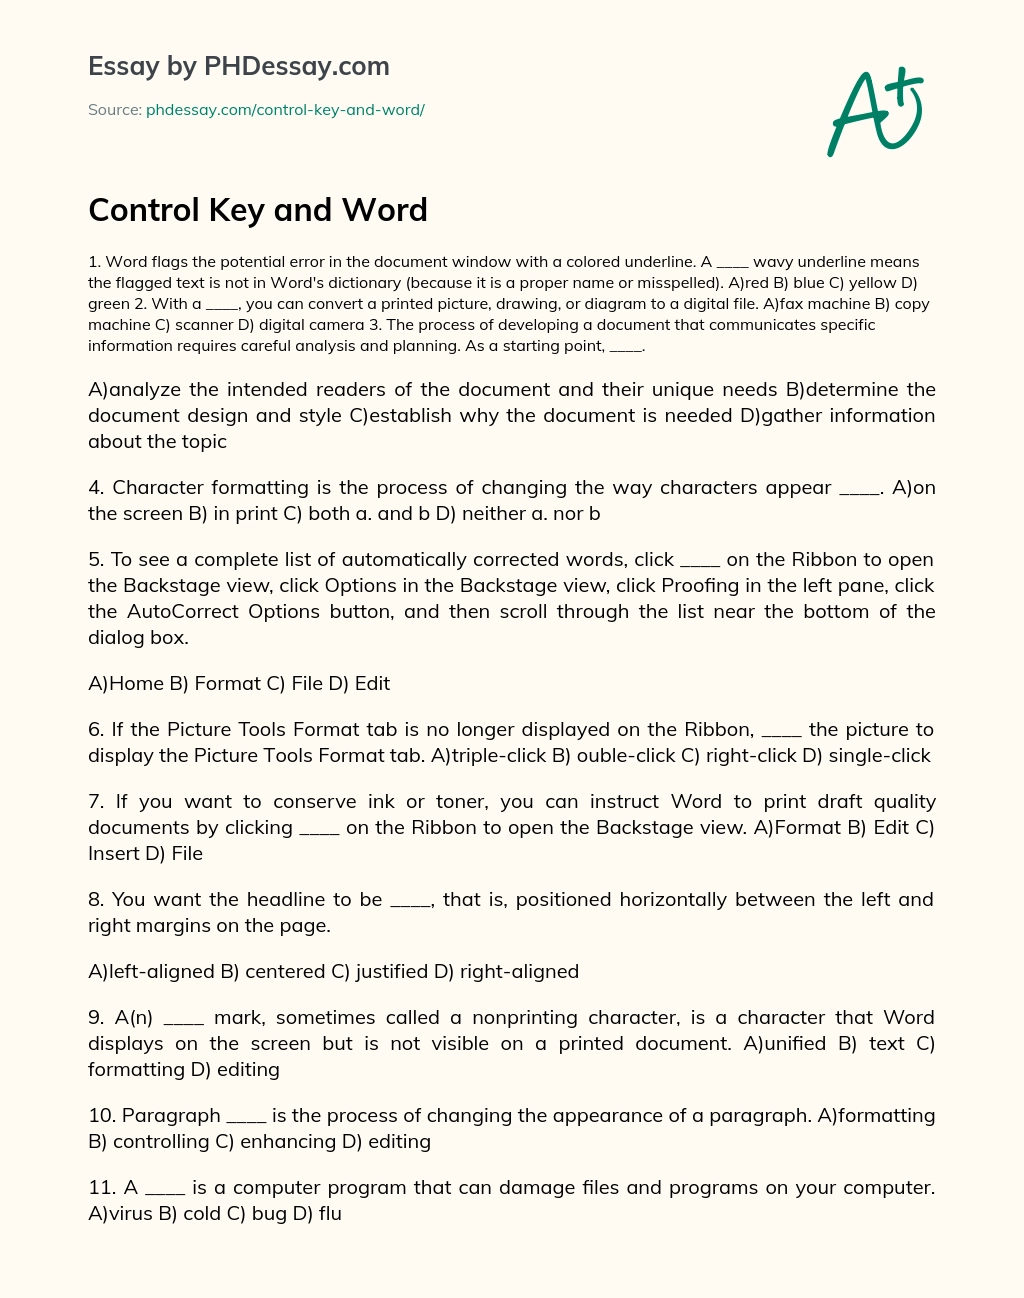 Control Key and Word essay